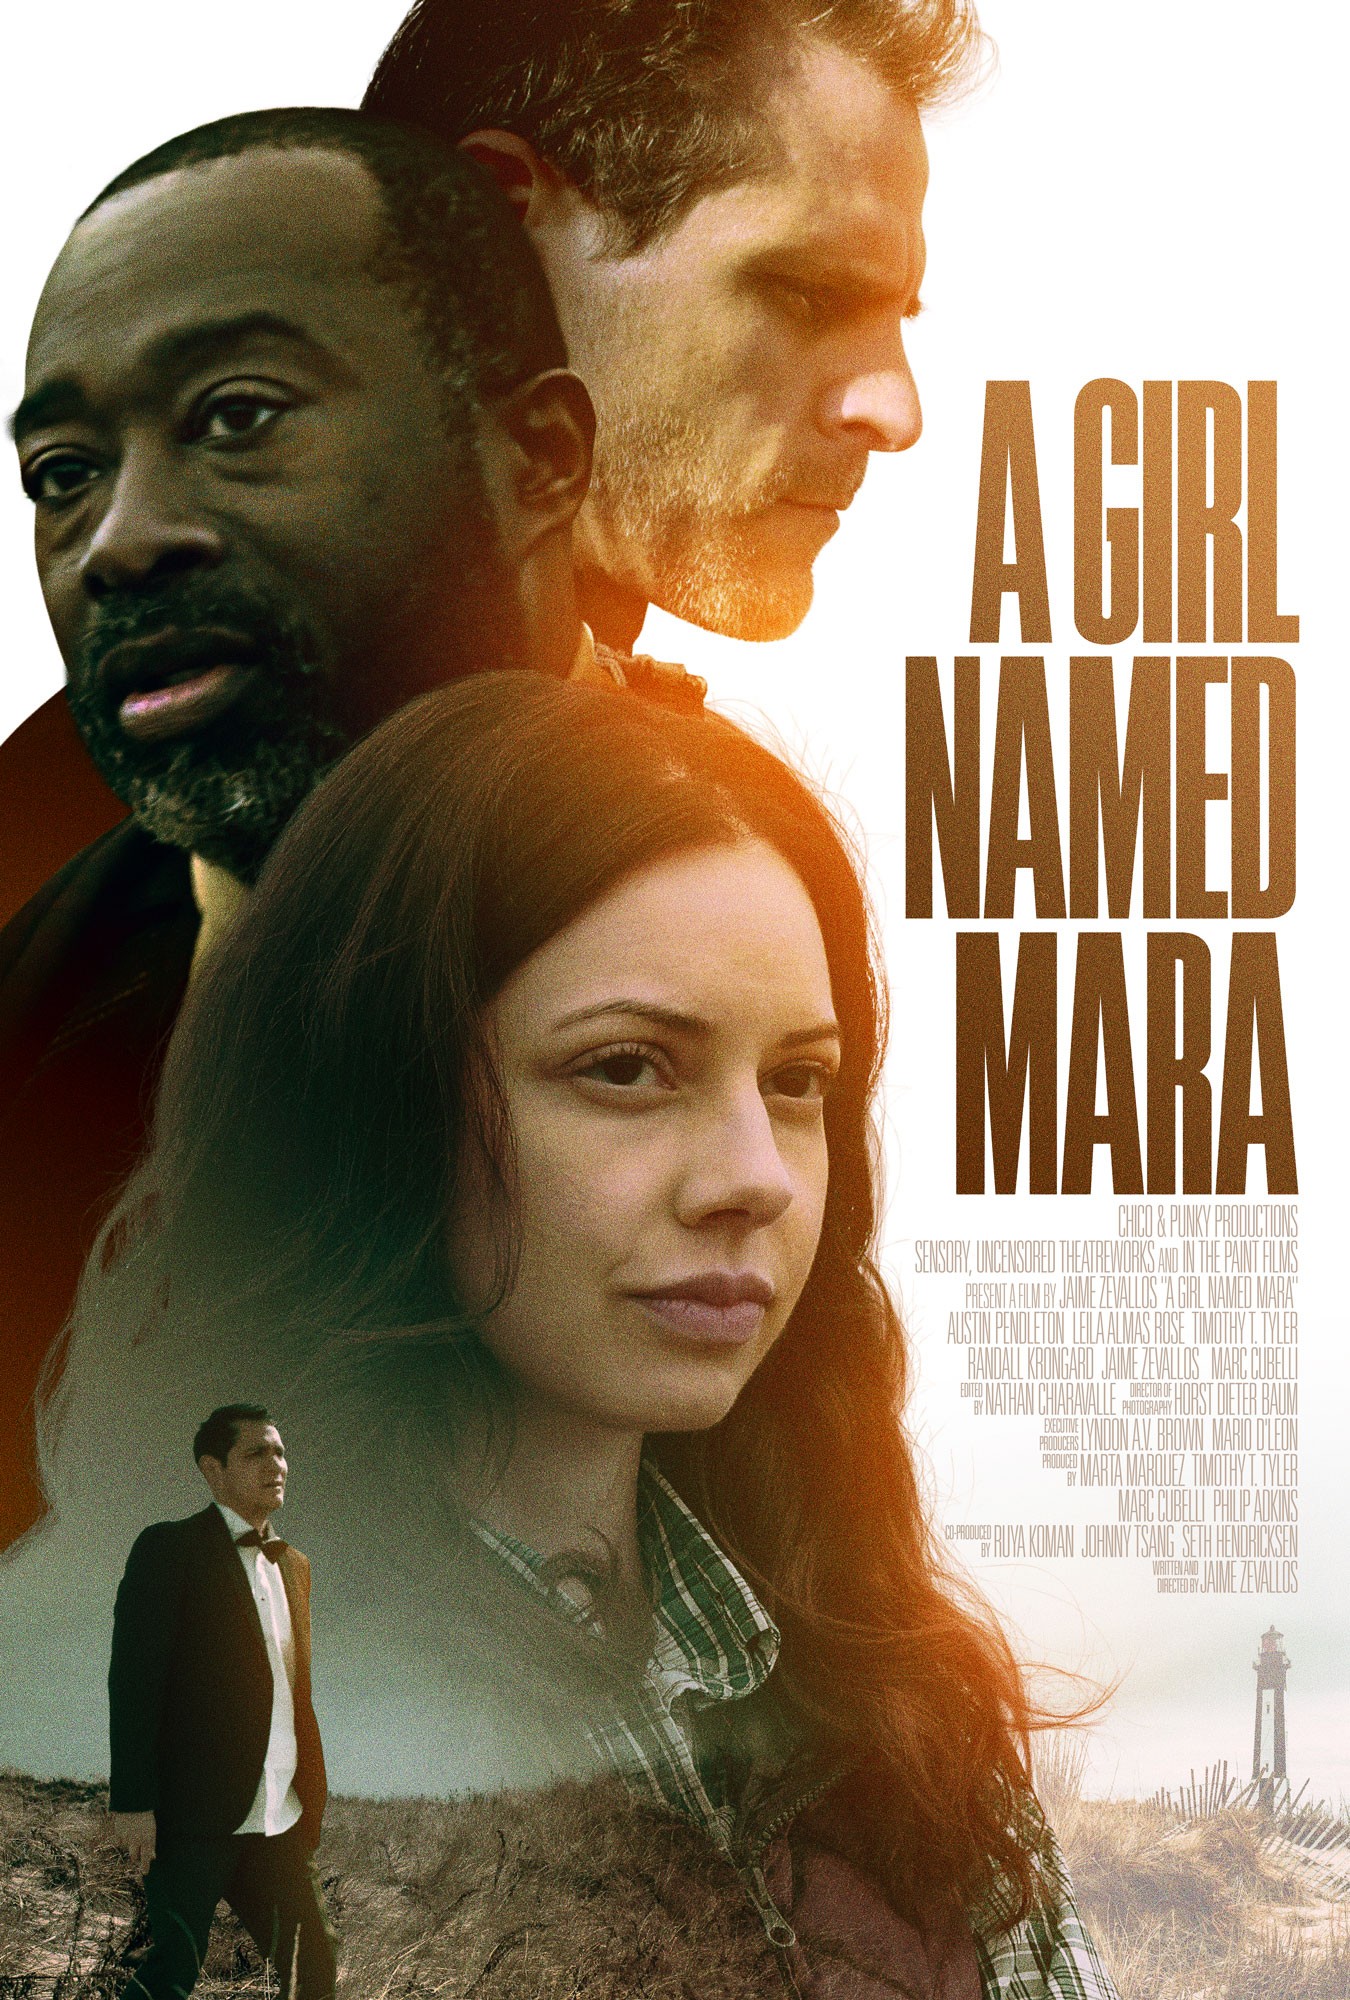 Mega Sized Movie Poster Image for A Girl Named Mara